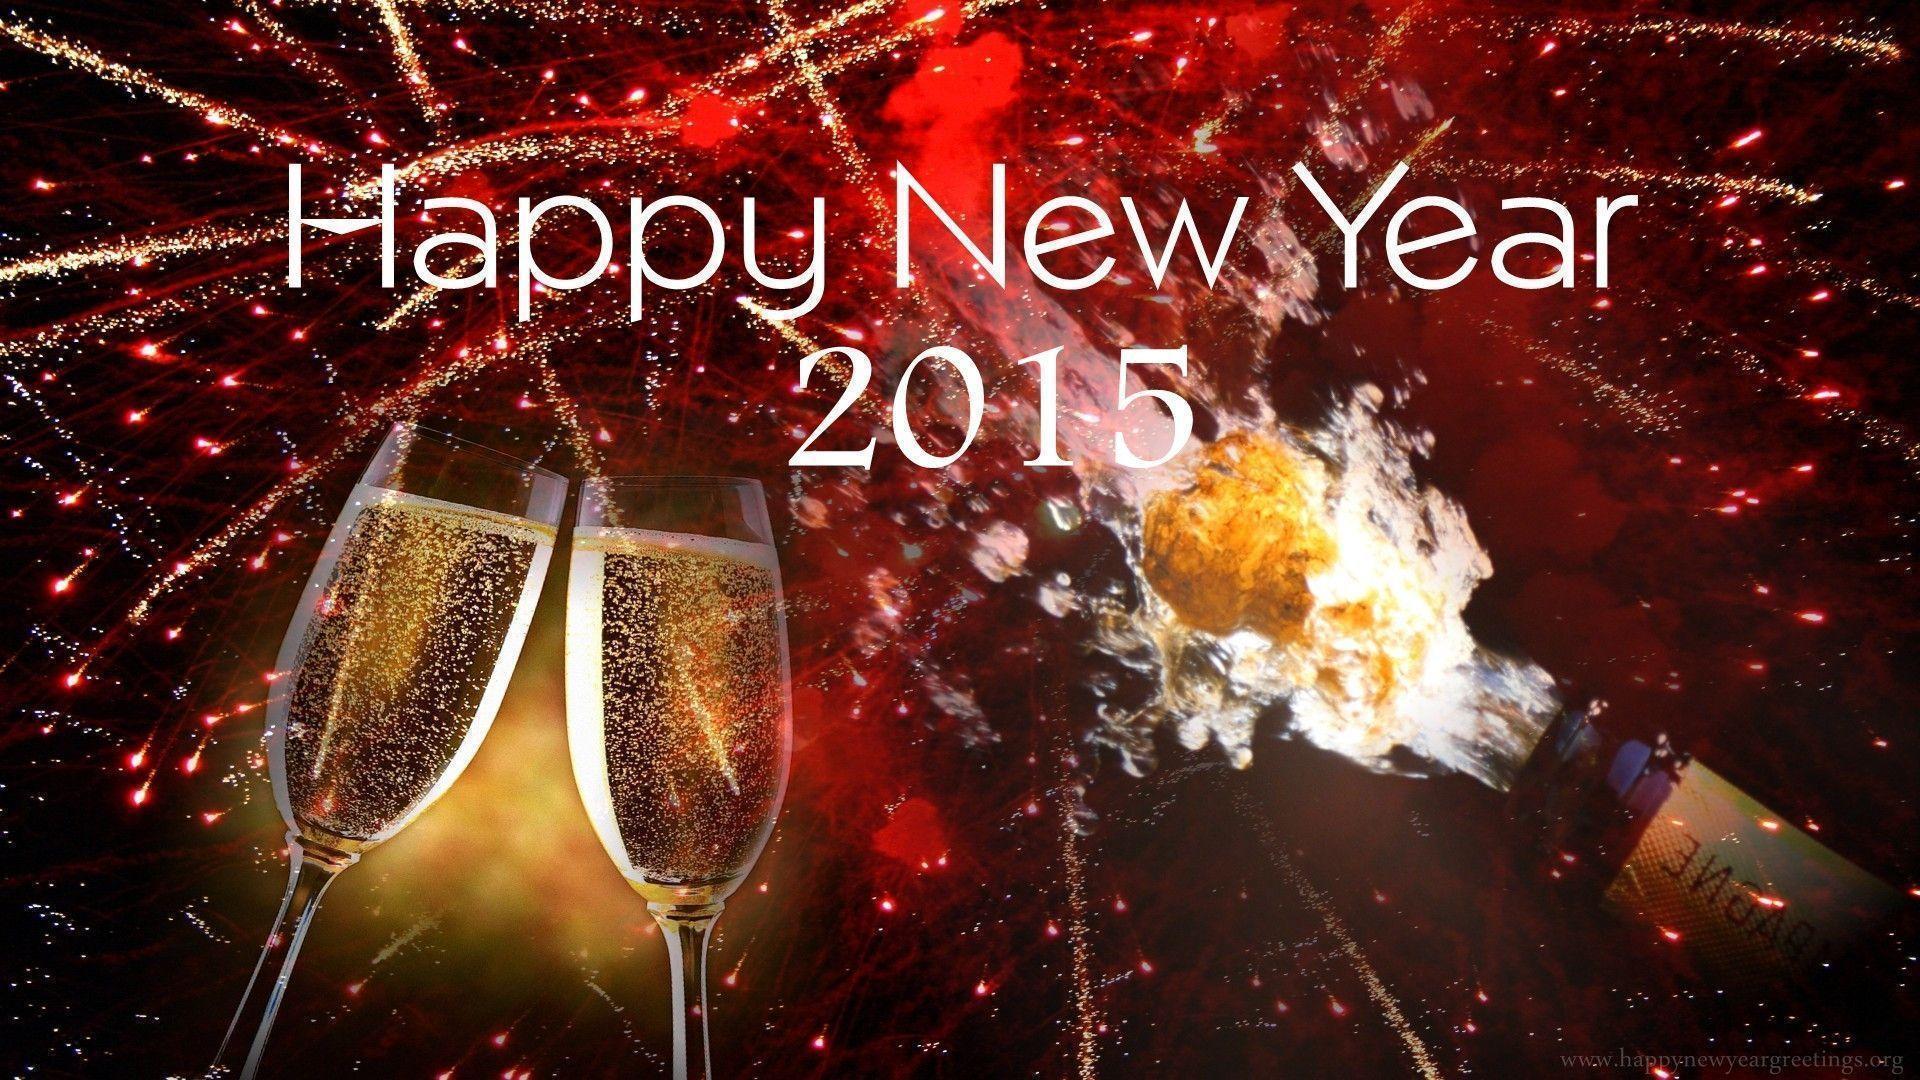 Happy New Year 2015 Party Ideas